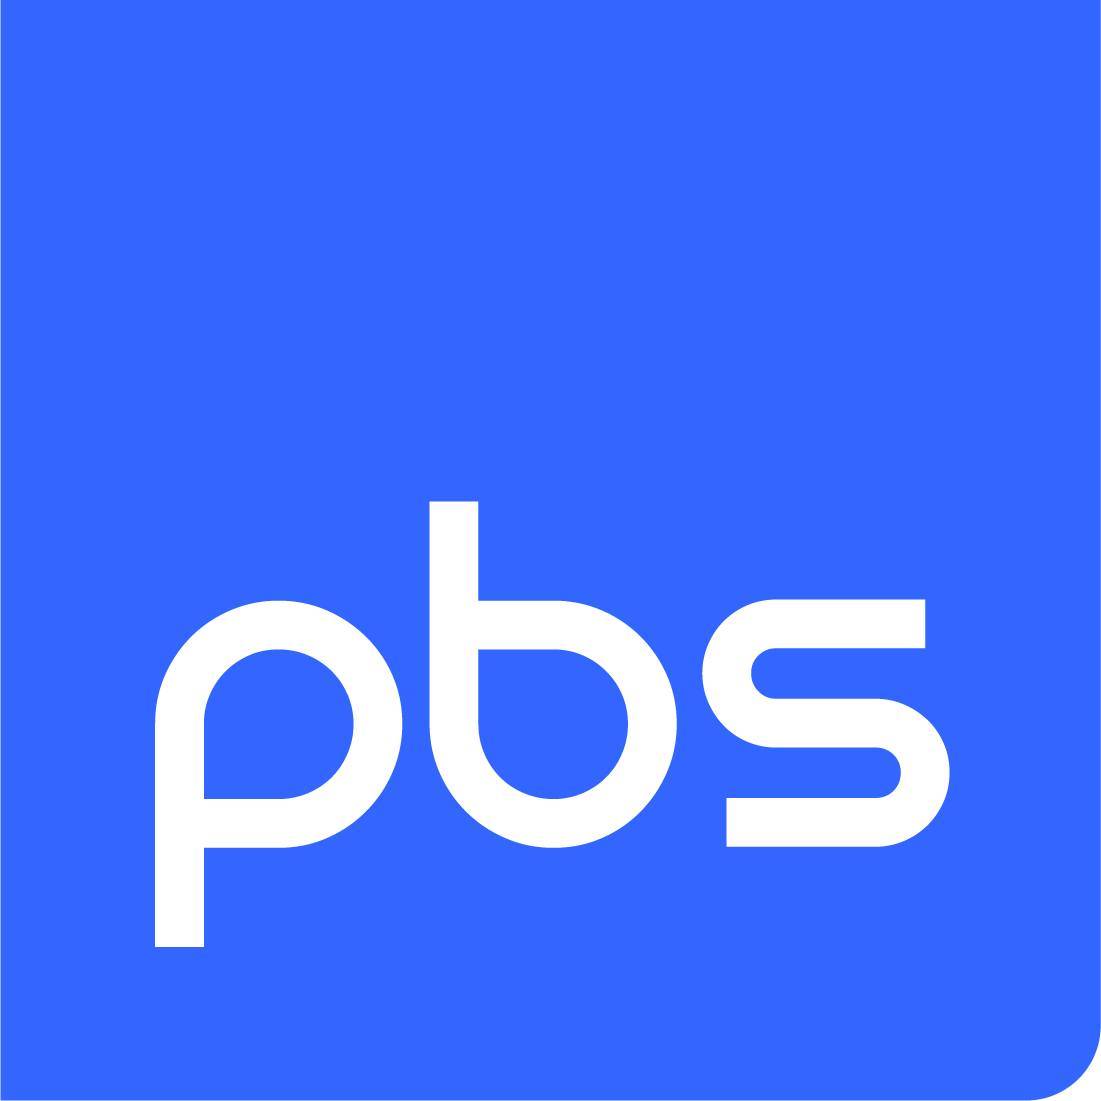 PBS Technologies